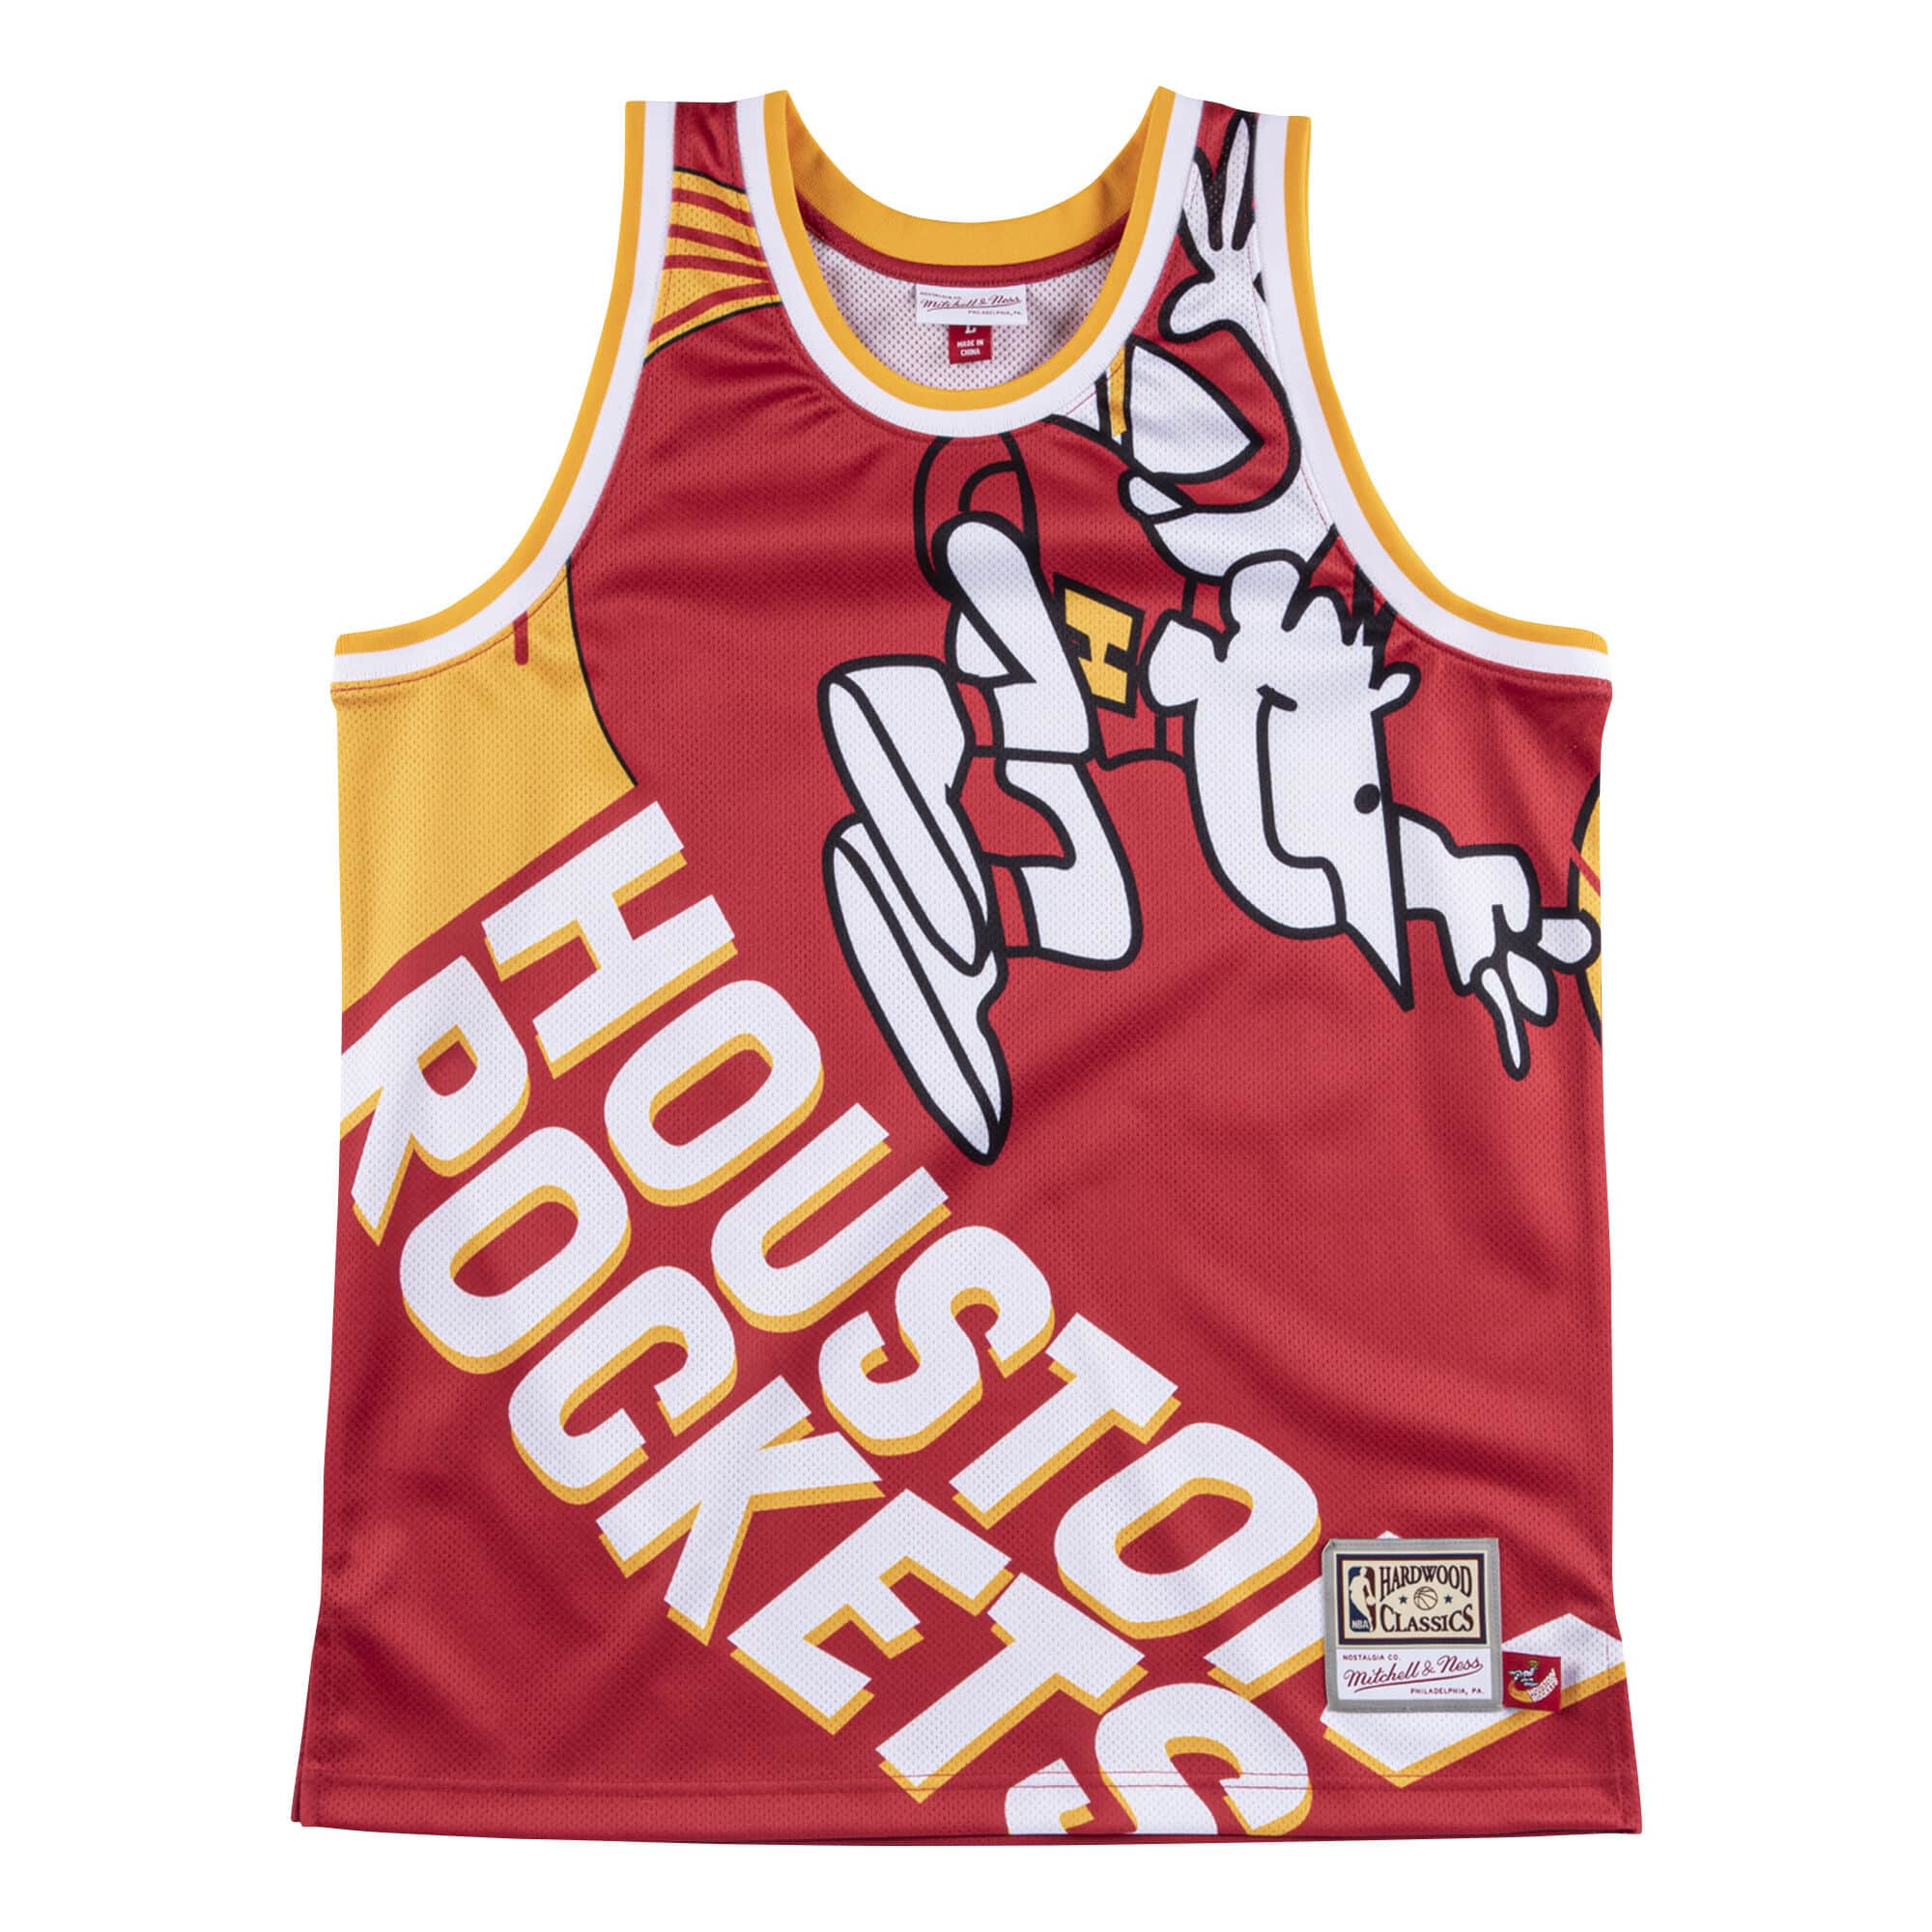 Mitchell & Ness NBA Big Face Jersey Rockets Mens Apparel XL / MSTKBW19068-HRORED1 / Red / Yellow